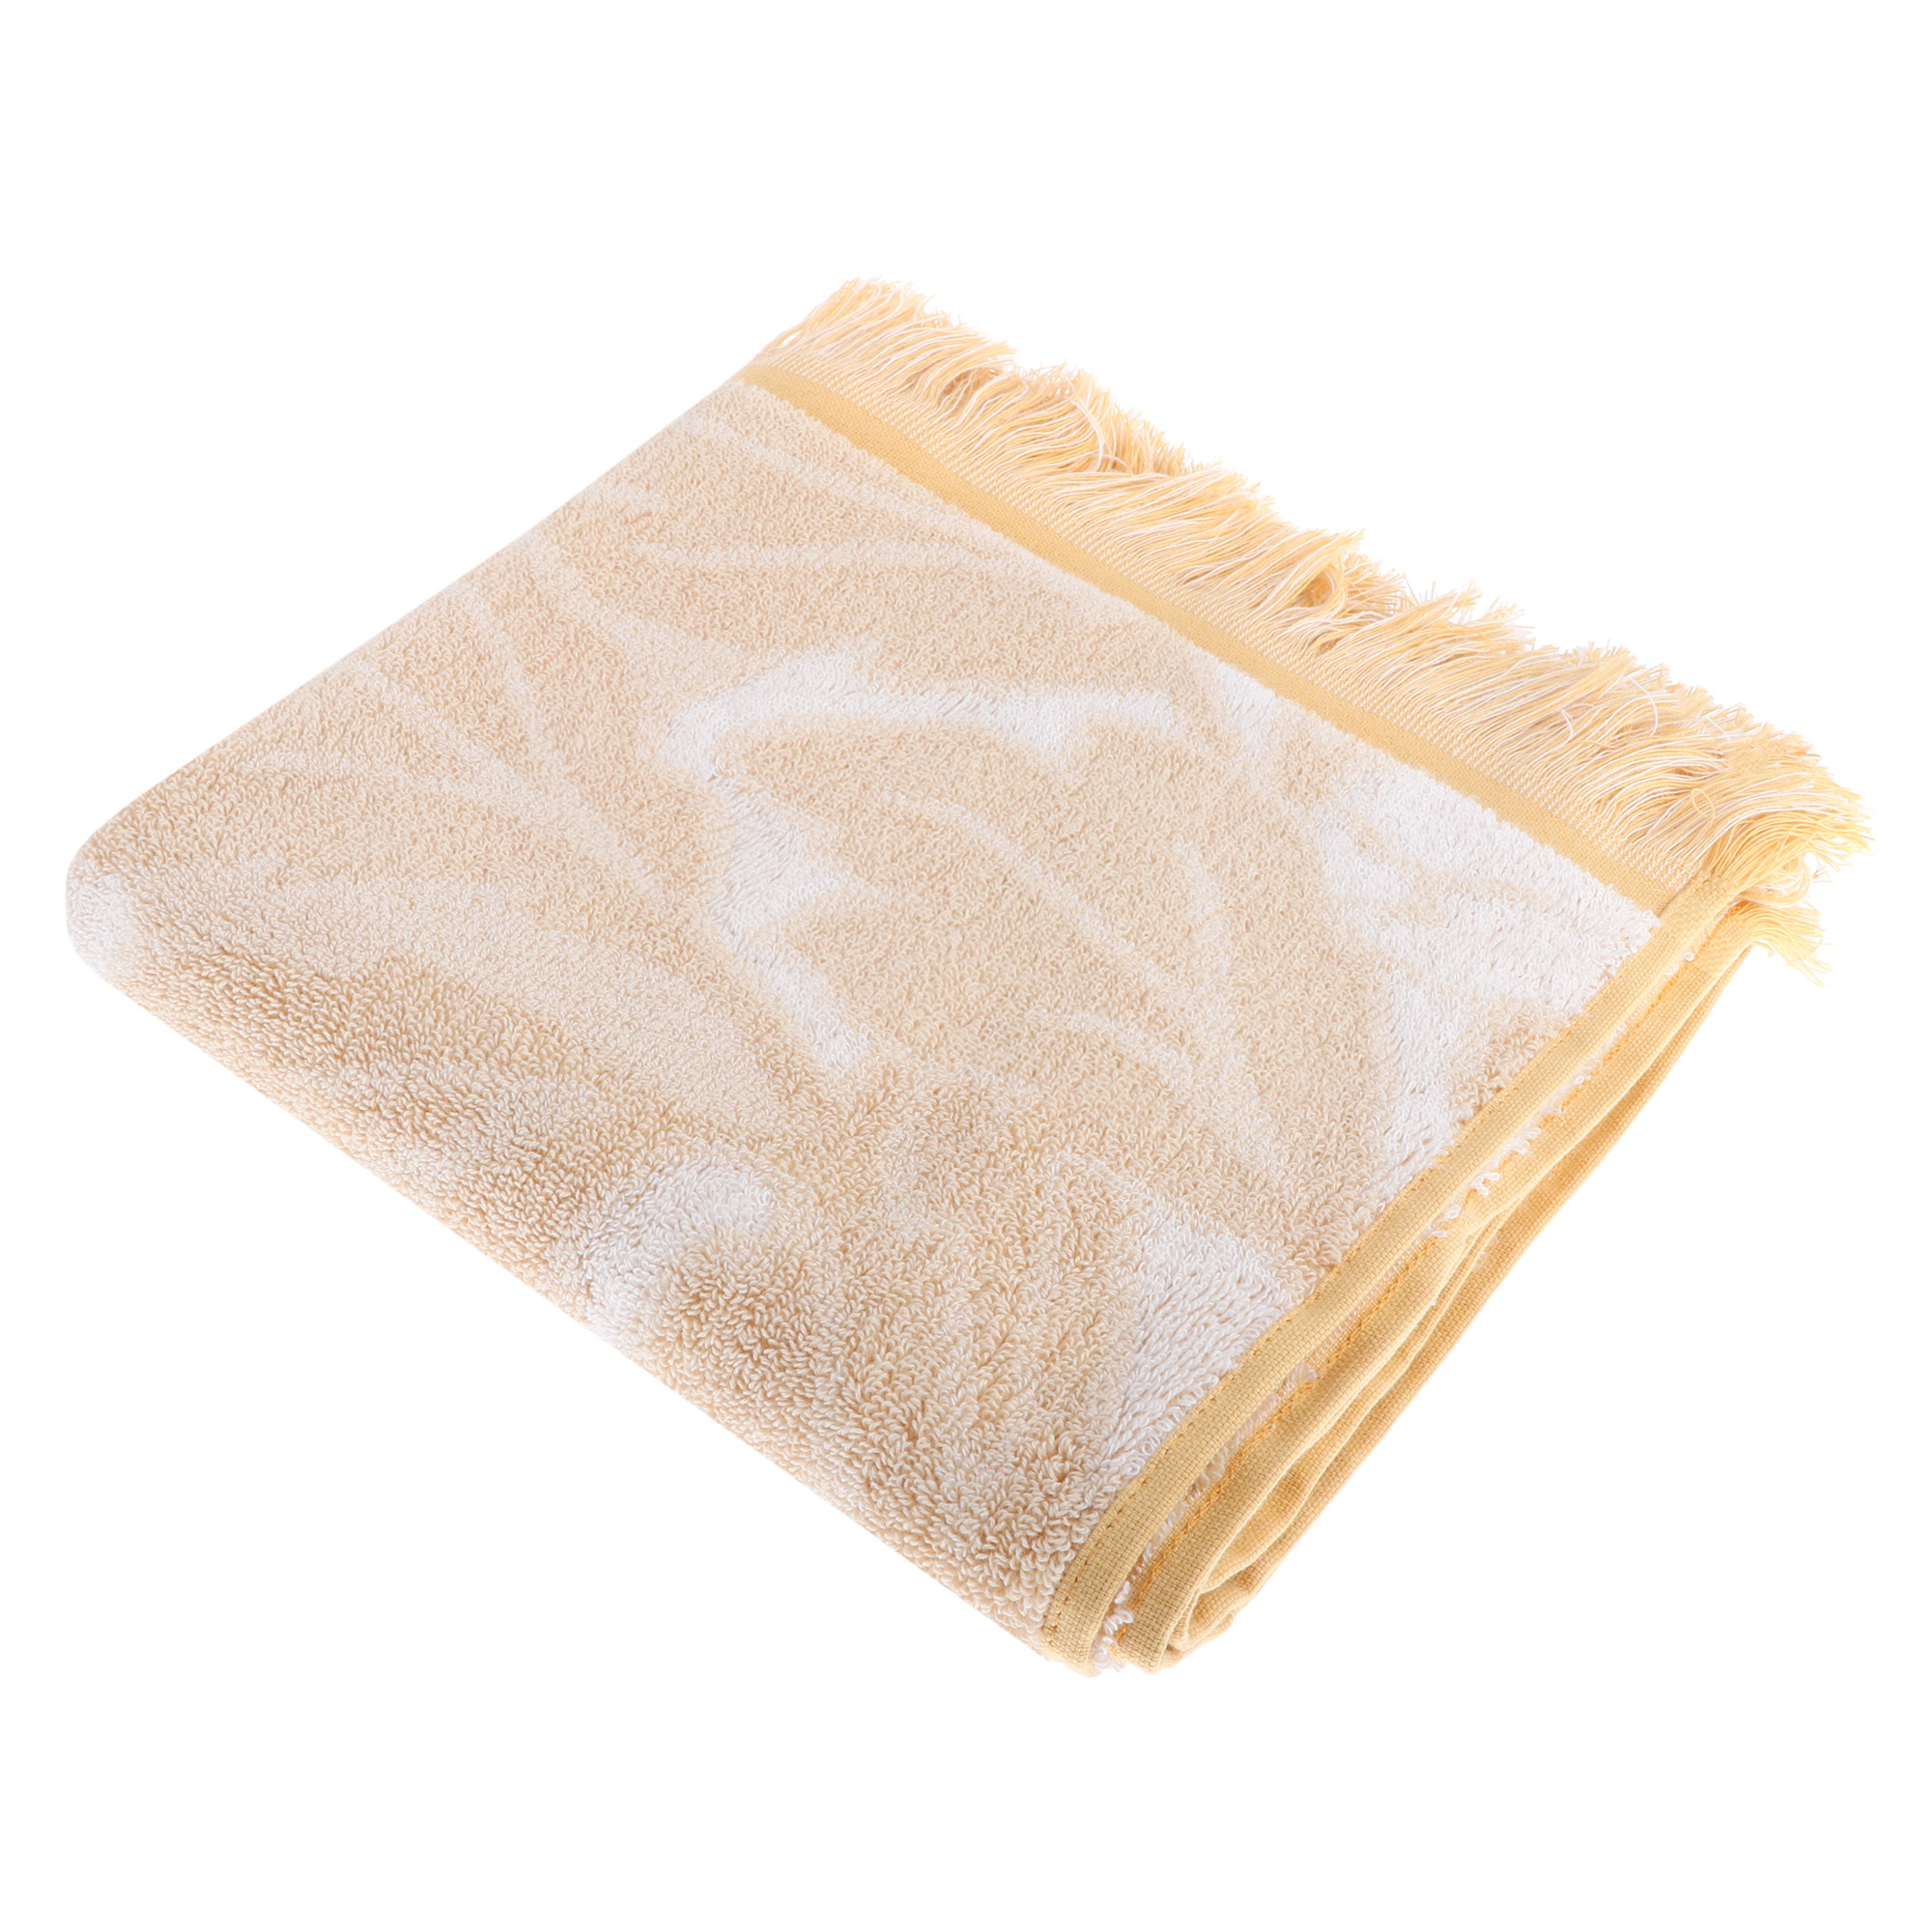 Полотенце махровое Cleanelly форэста 50х100 пестротканное бело-горчичное полотенце махровое cleanelly торта 50х100 гладкокрашенное с эффектом велюра